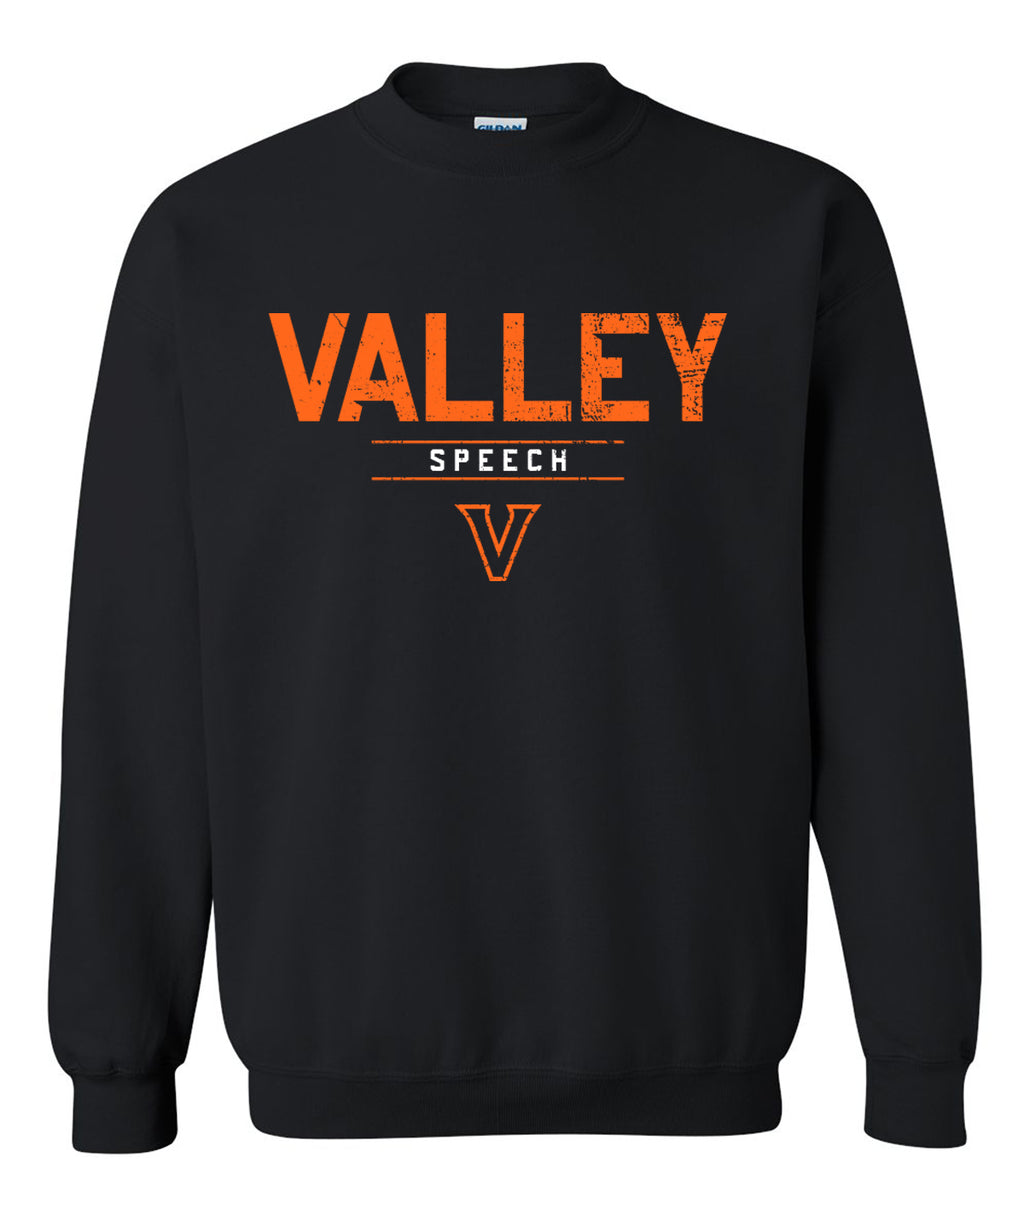 Valley Speech Crewneck Sweatshirt